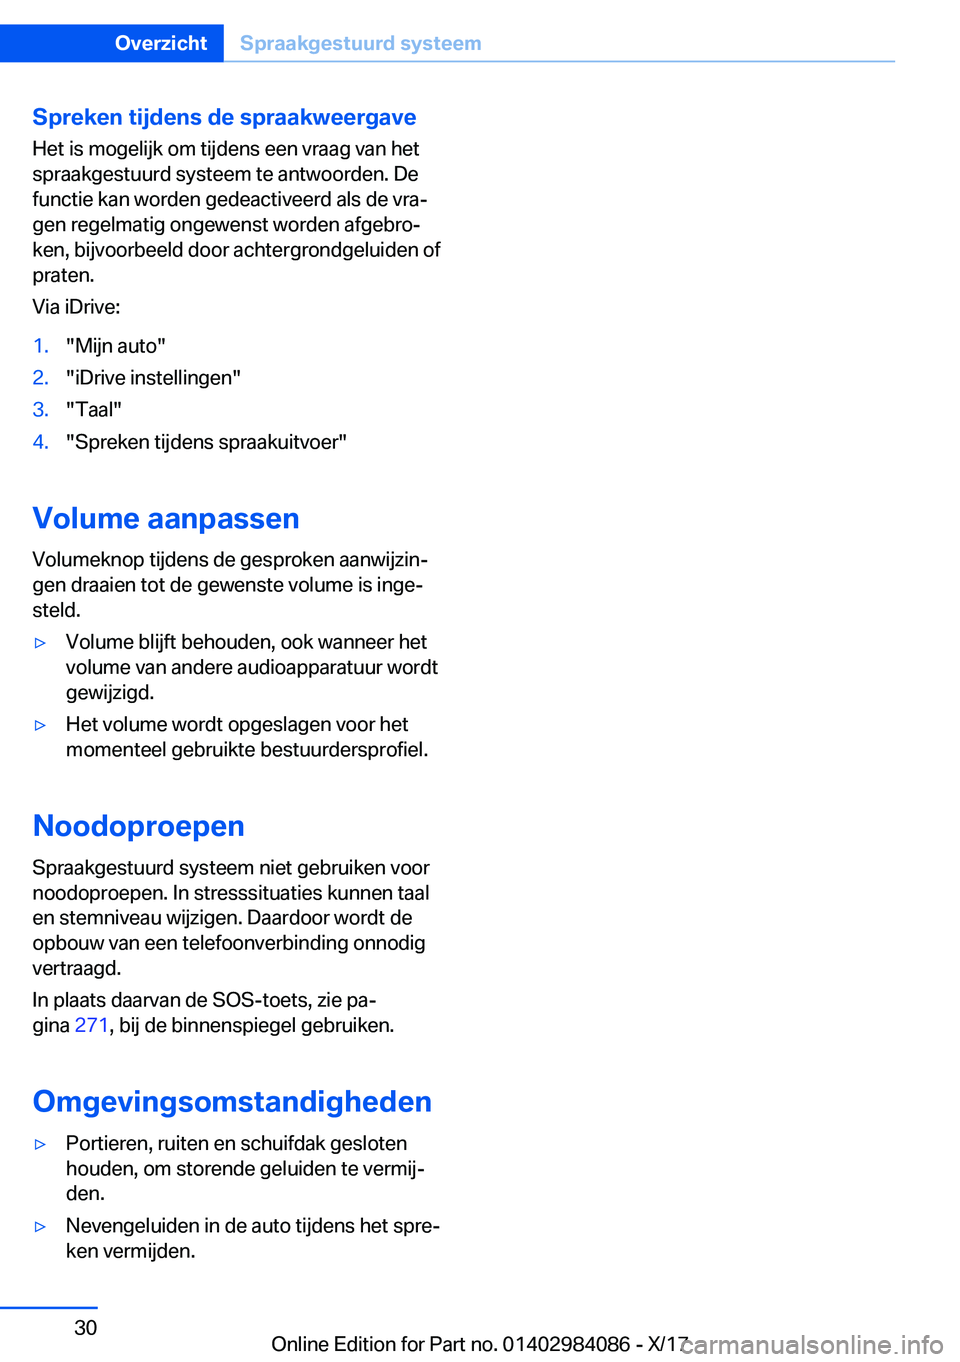 BMW 3 SERIES 2018  Instructieboekjes (in Dutch) �S�p�r�e�k�e�n��t�i�j�d�e�n�s��d�e��s�p�r�a�a�k�w�e�e�r�g�a�v�e�H�e�t� �i�s� �m�o�g�e�l�i�j�k� �o�m� �t�i�j�d�e�n�s� �e�e�n� �v�r�a�a�g� �v�a�n� �h�e�t
�s�p�r�a�a�k�g�e�s�t�u�u�r�d� �s�y�s�t�e�e�m�